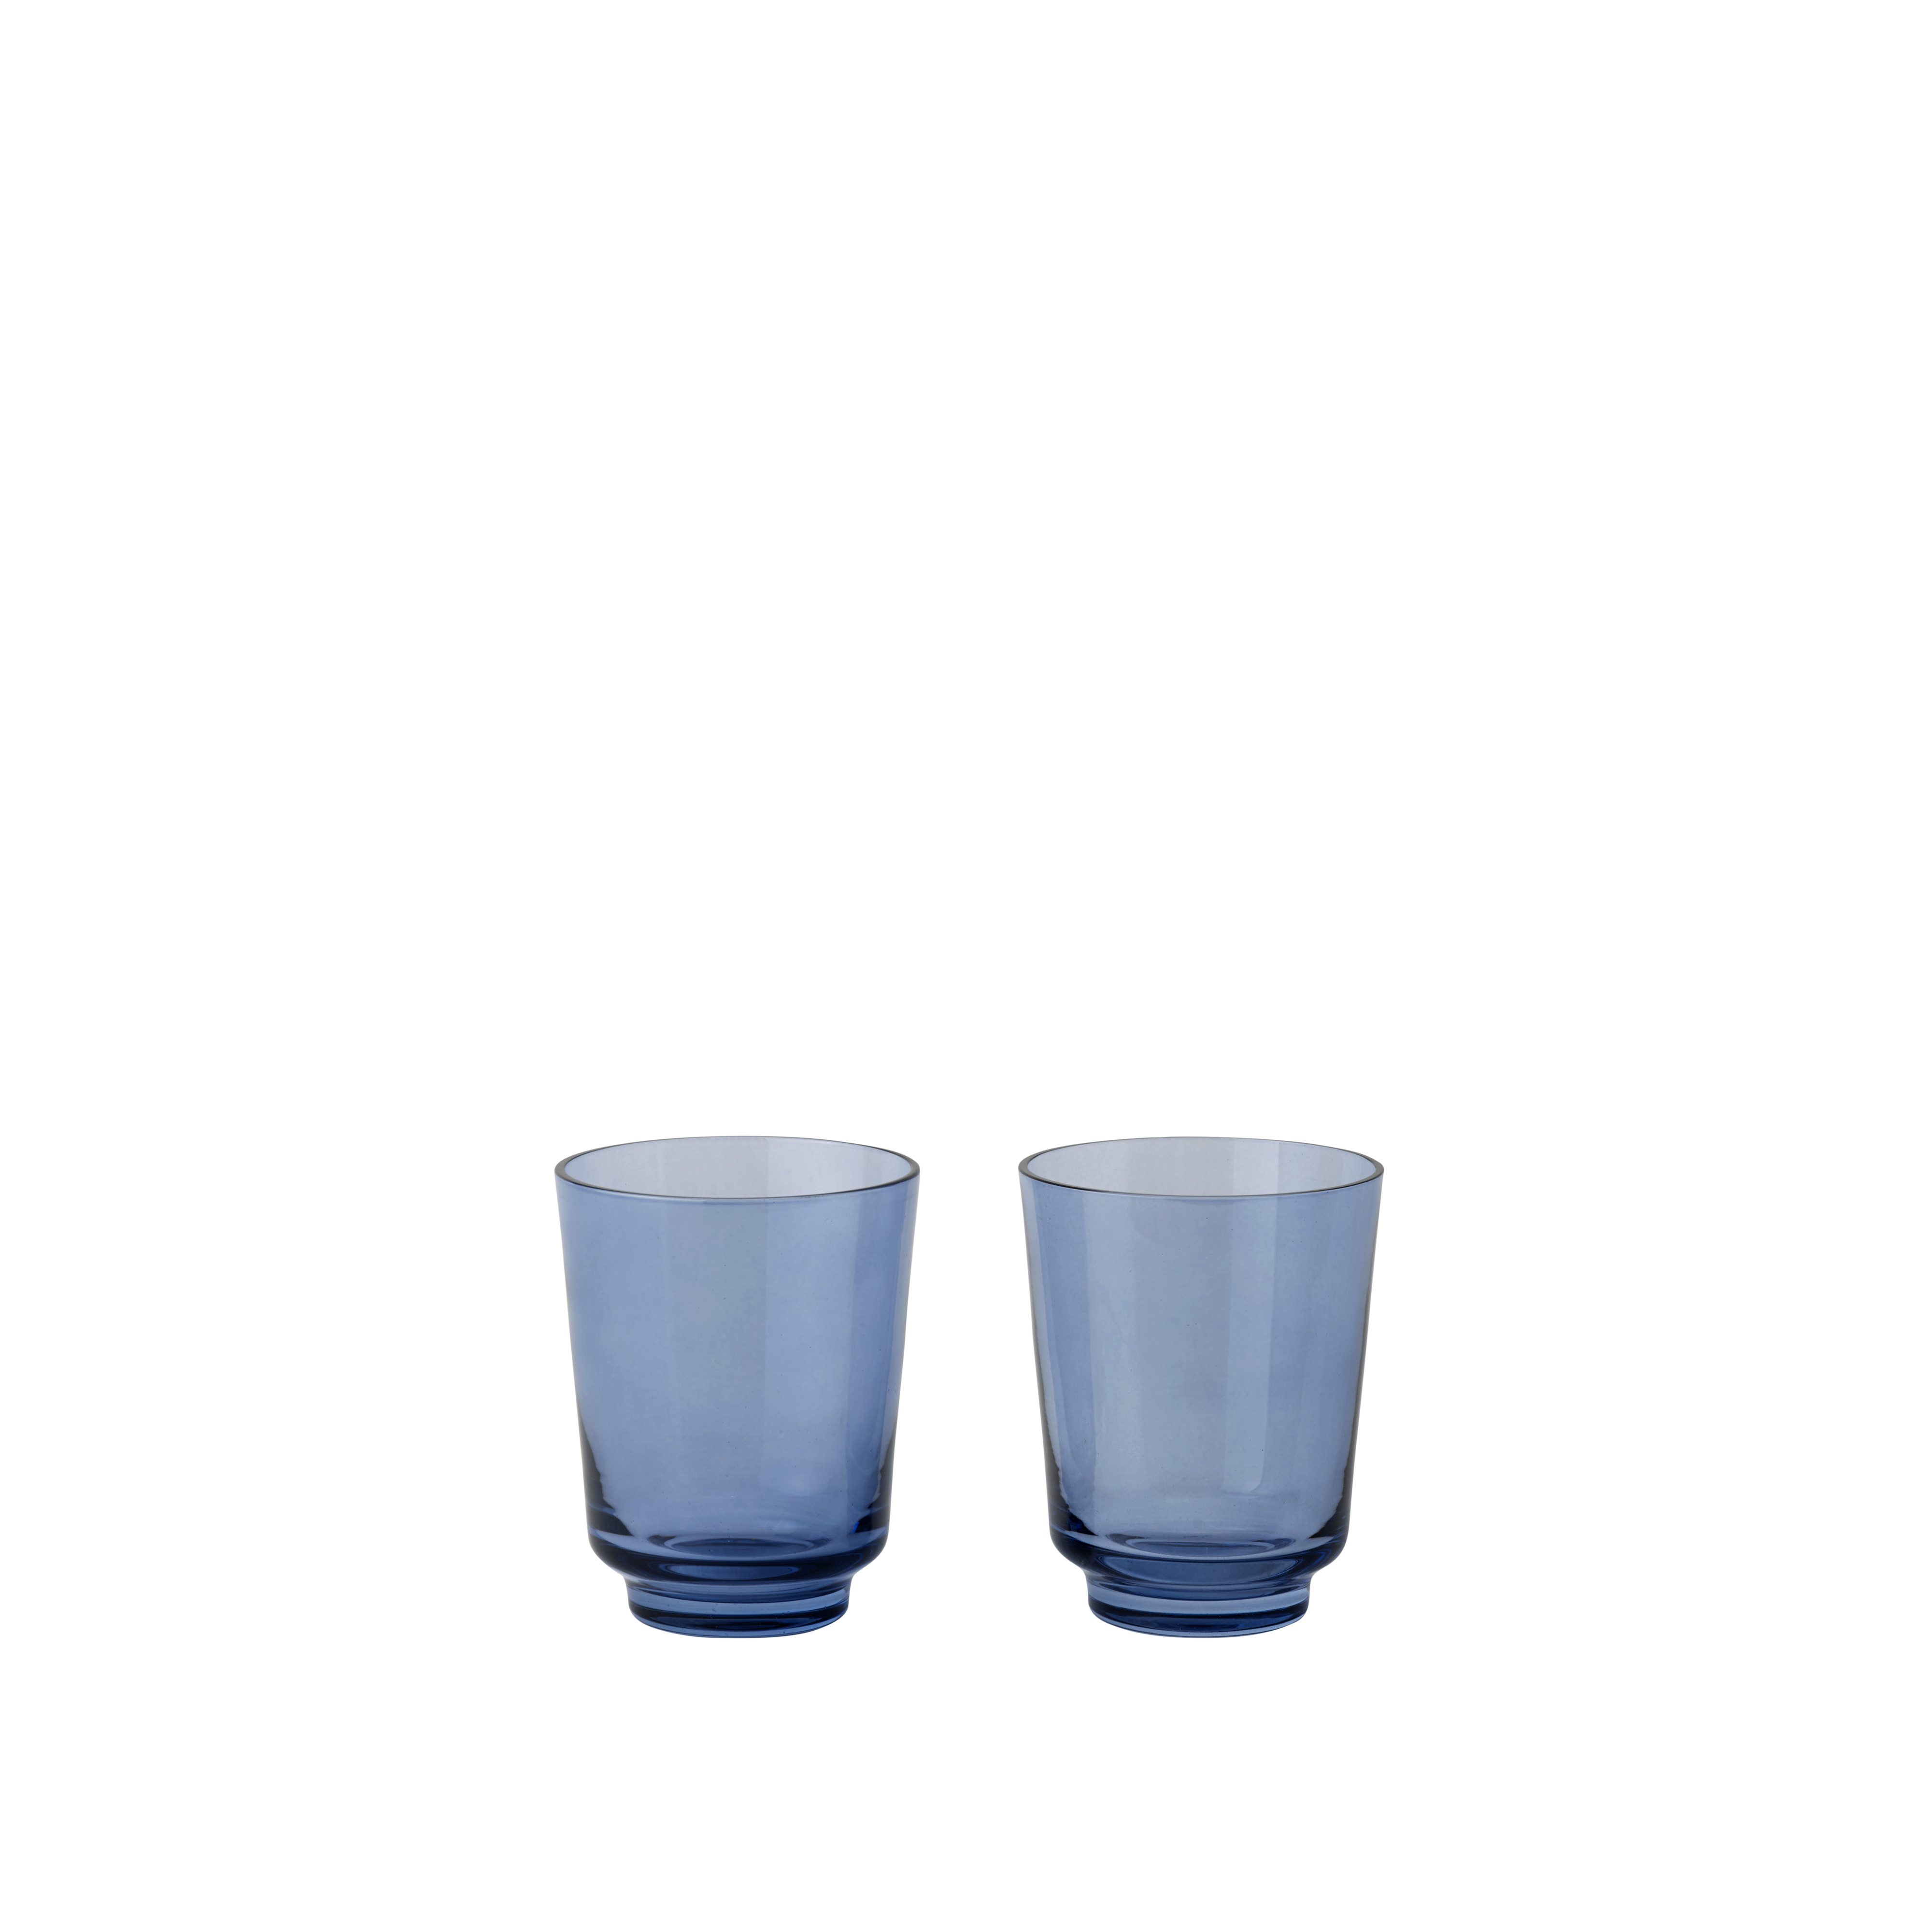 https://www.muuto.com/globalassets/digizuite/18851-en-raise-glasses-30-cl-dark-blue-muuto-5000x5000-hi-res.tif?mediaformatid=50105&extension=.jpg&revision=6